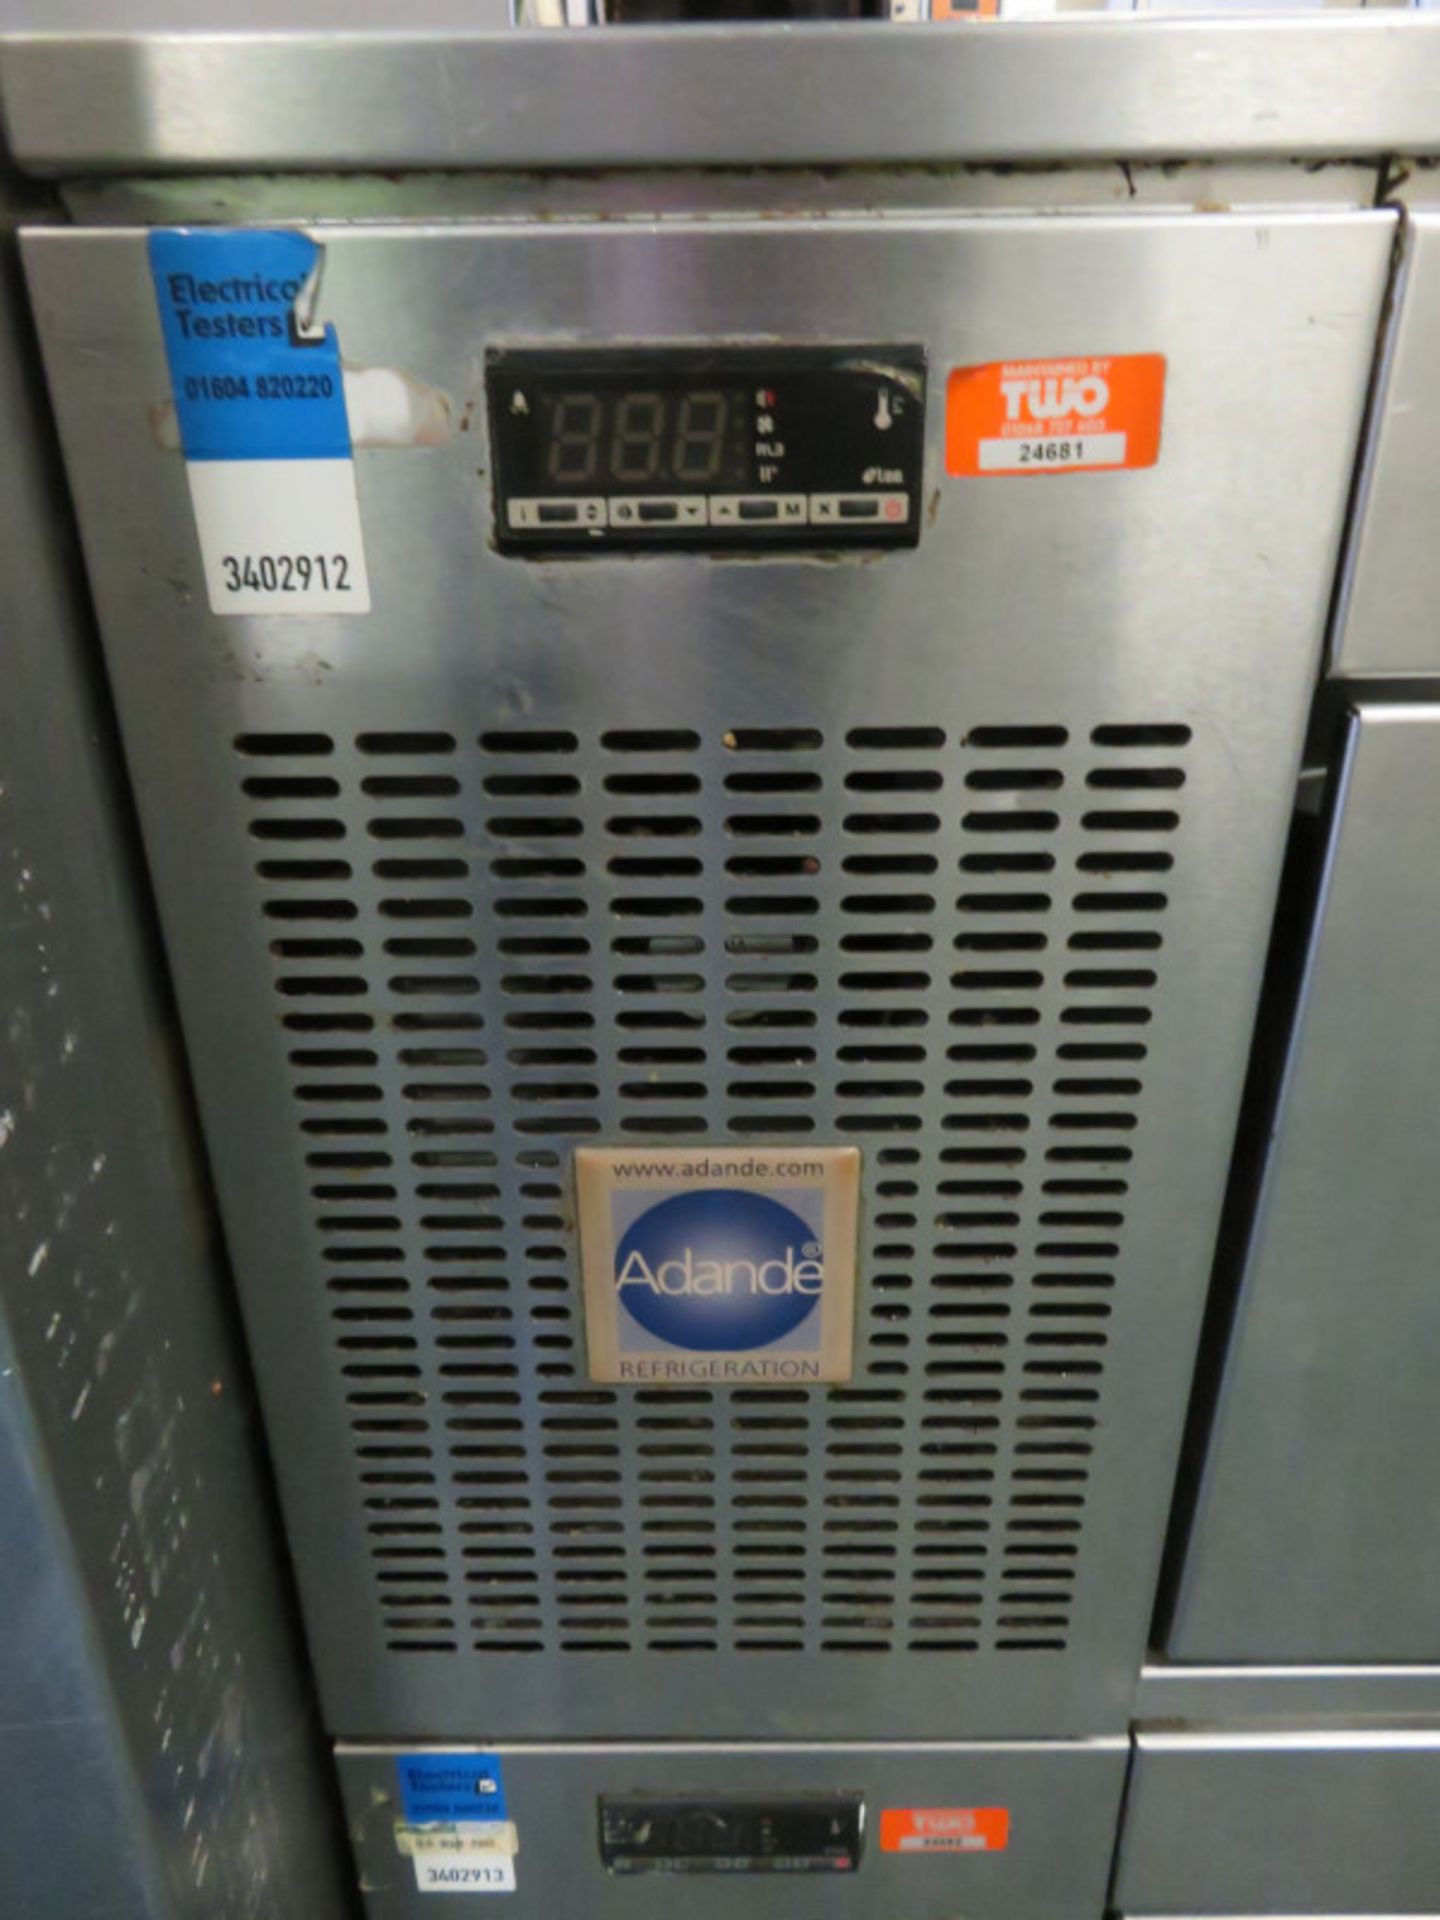 Adande 2 drawer refrigeration unit - 1100mm x 700mm x 860mm - Image 3 of 3